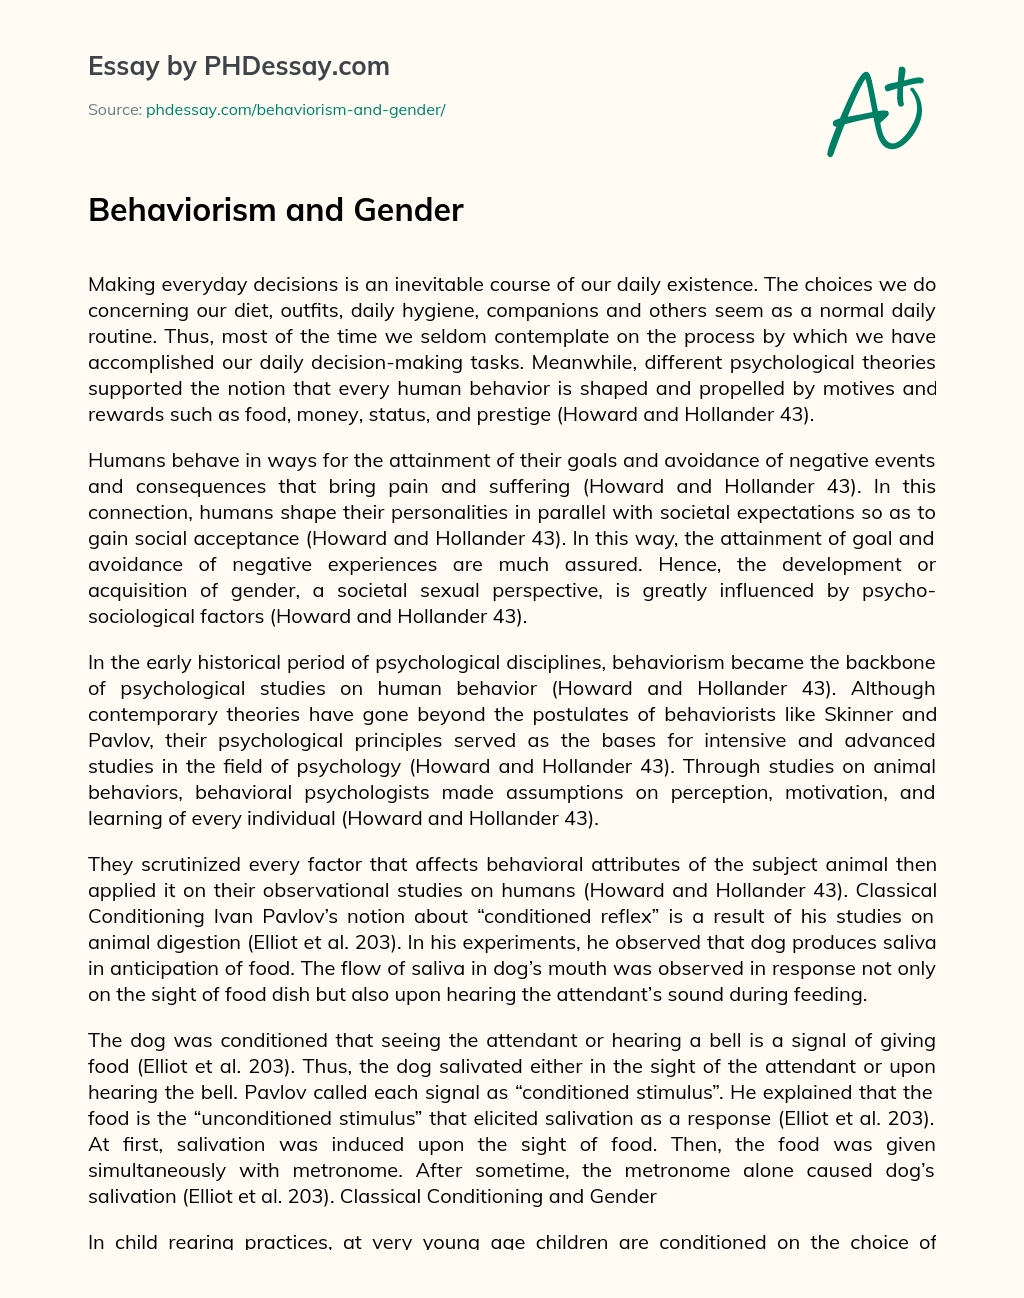 Behaviorism and Gender essay